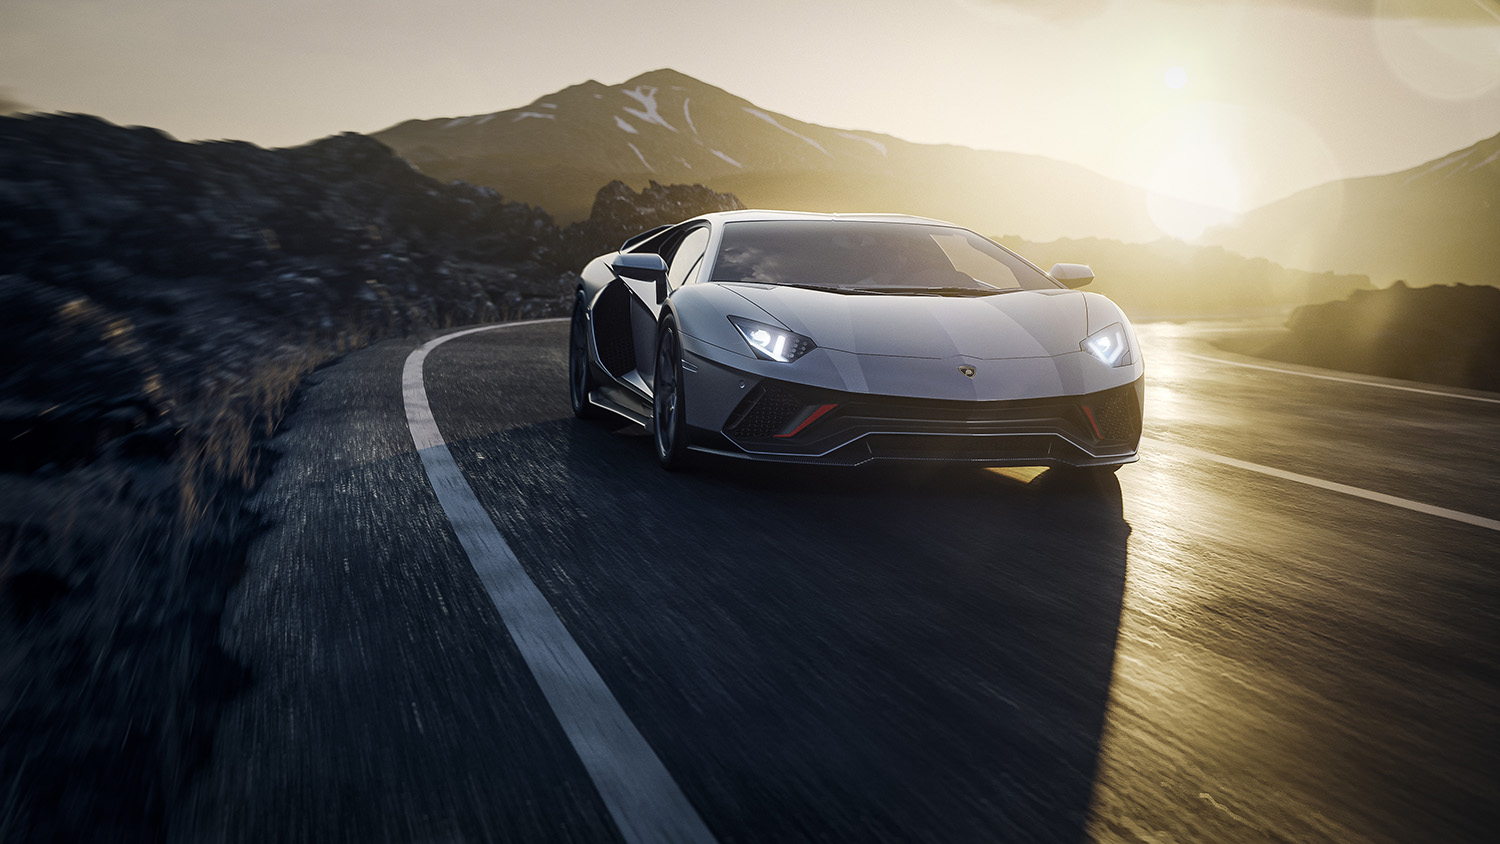 2022 Lamborghini Aventador Ultimae final edition driving on road in sunset